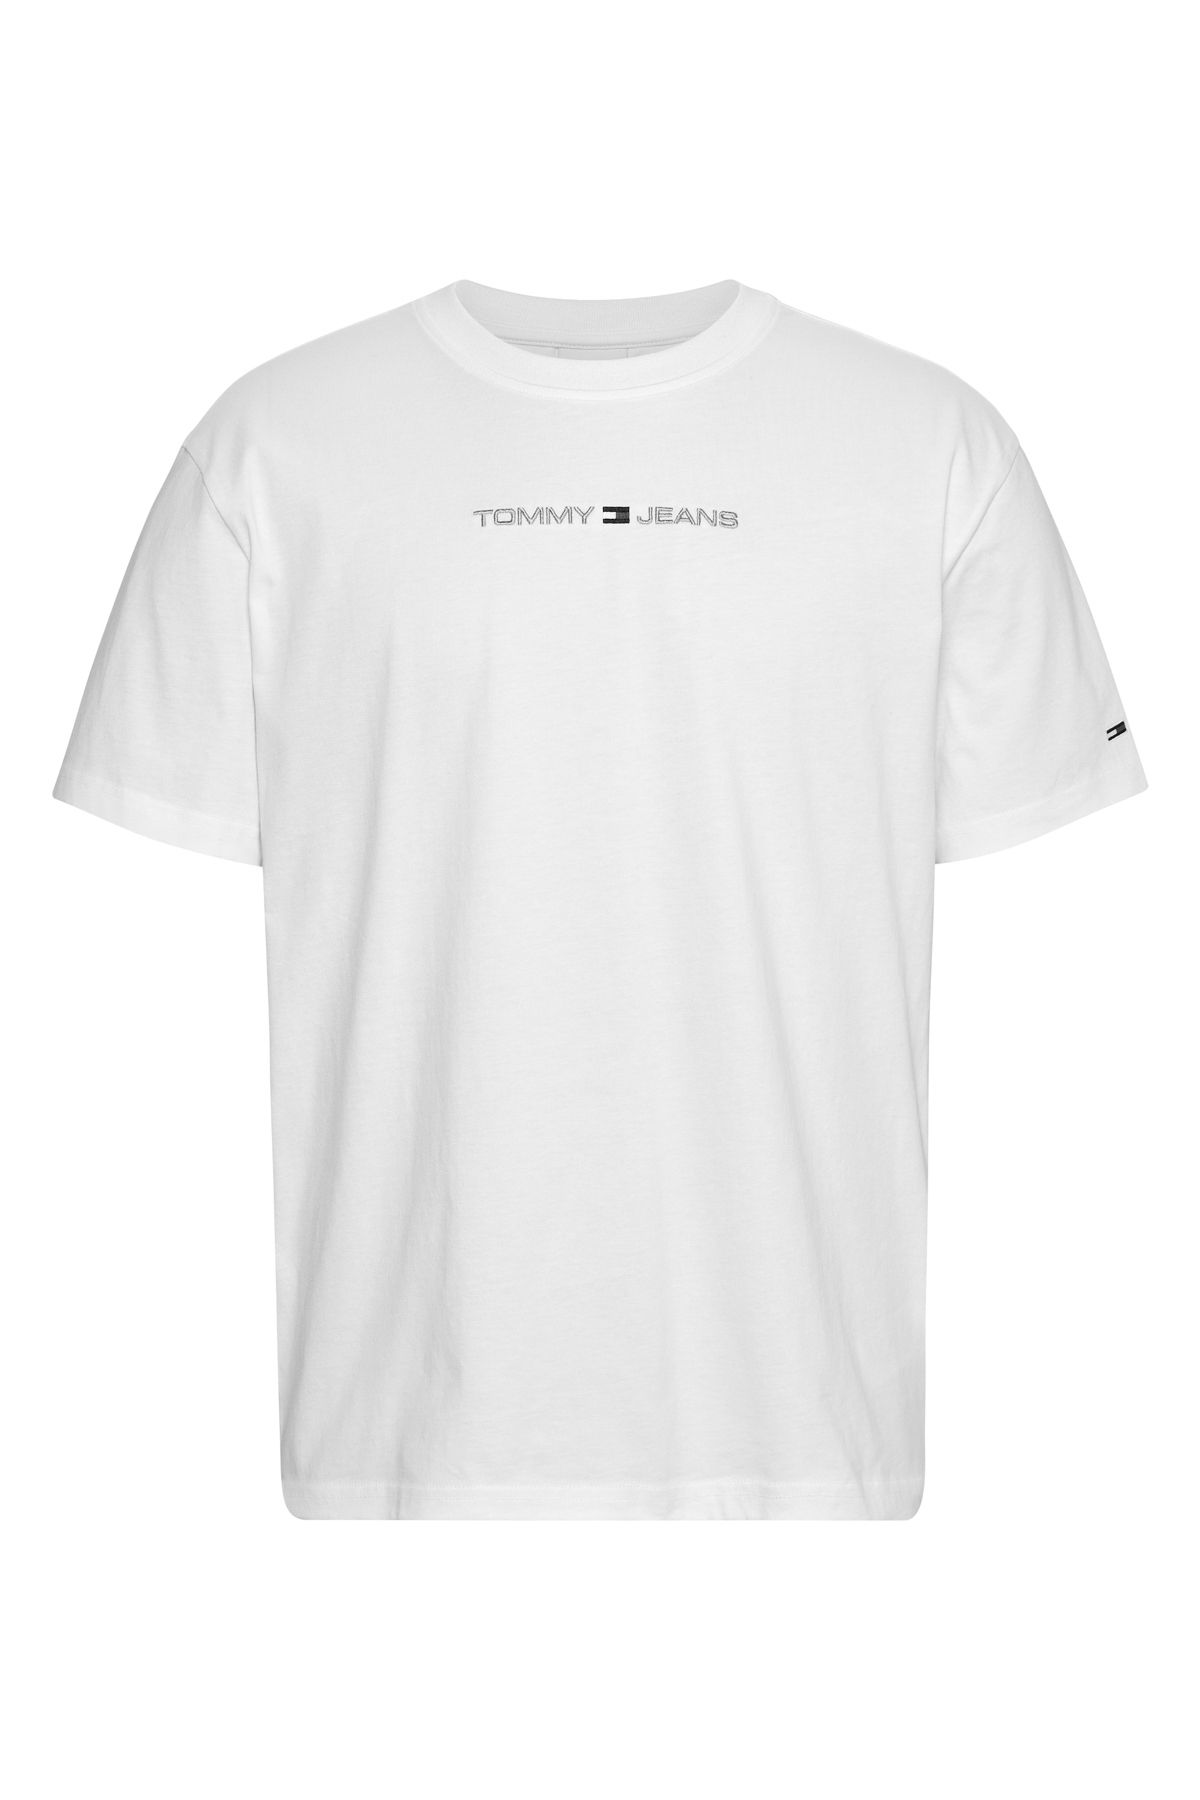 Tommy Hilfiger T-Shirt Erkek White Yorumları Fiyatı, - Trendyol